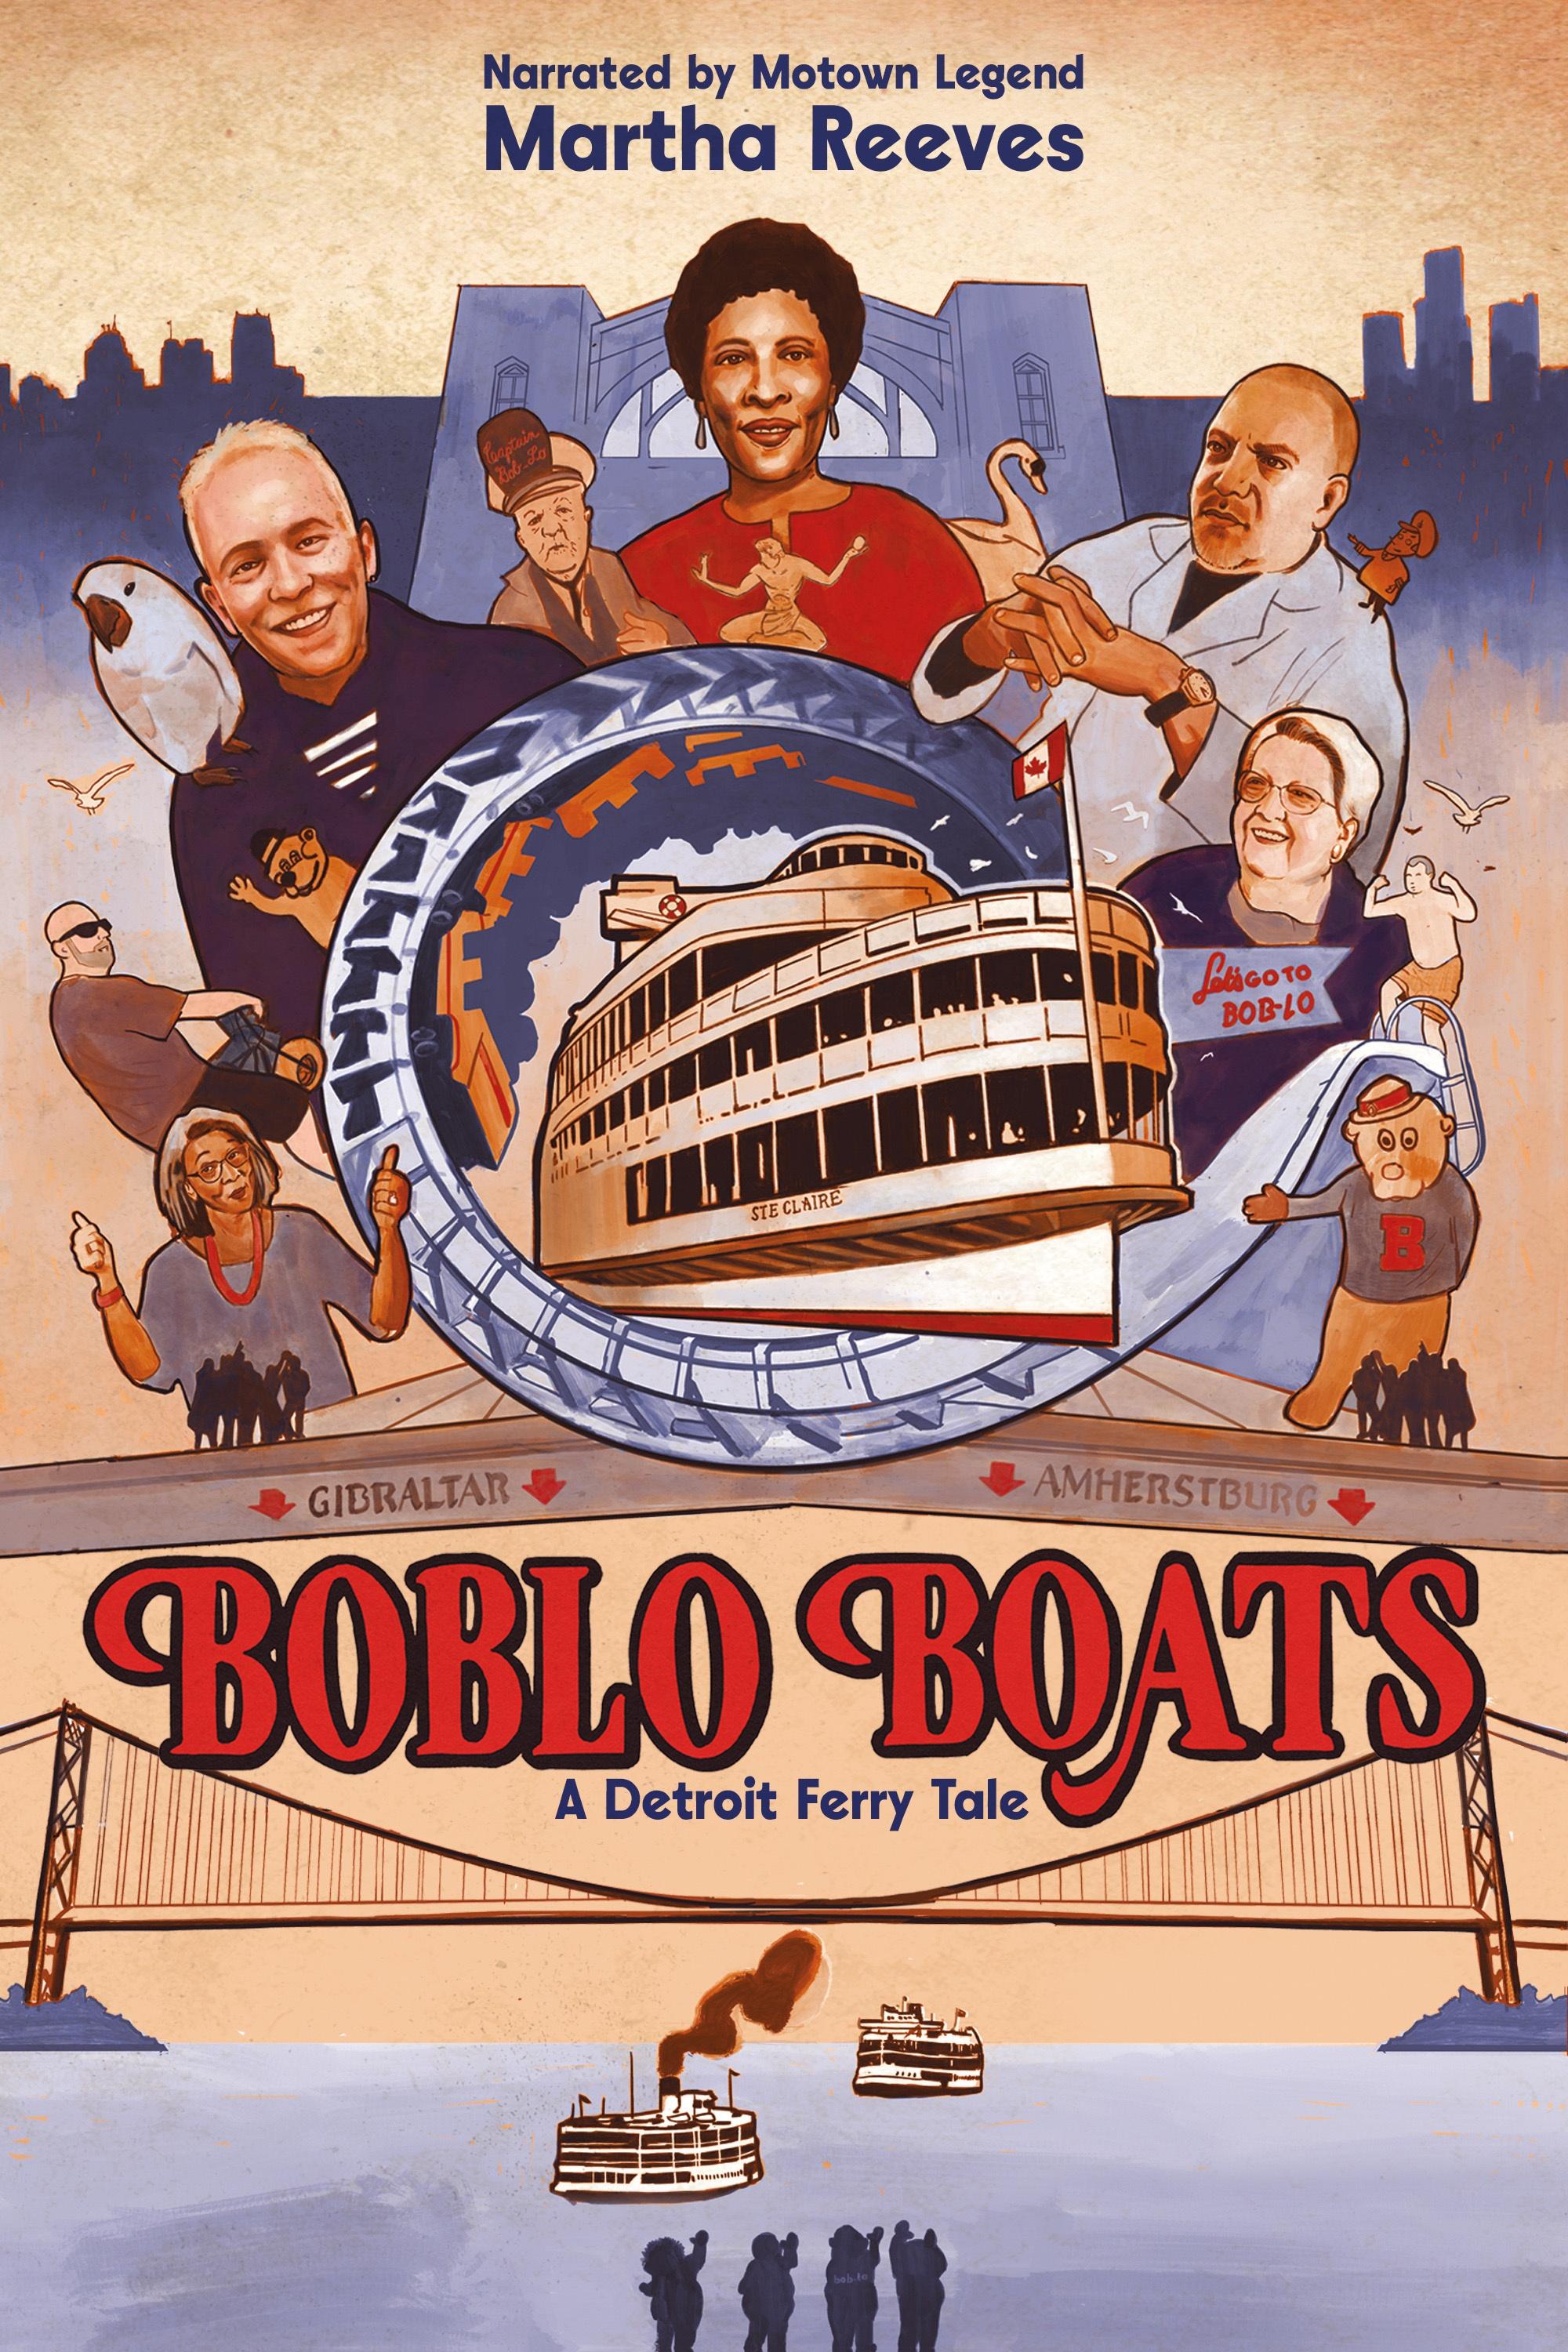 Boblo Boats: A Detroit Ferry Tale show's poster